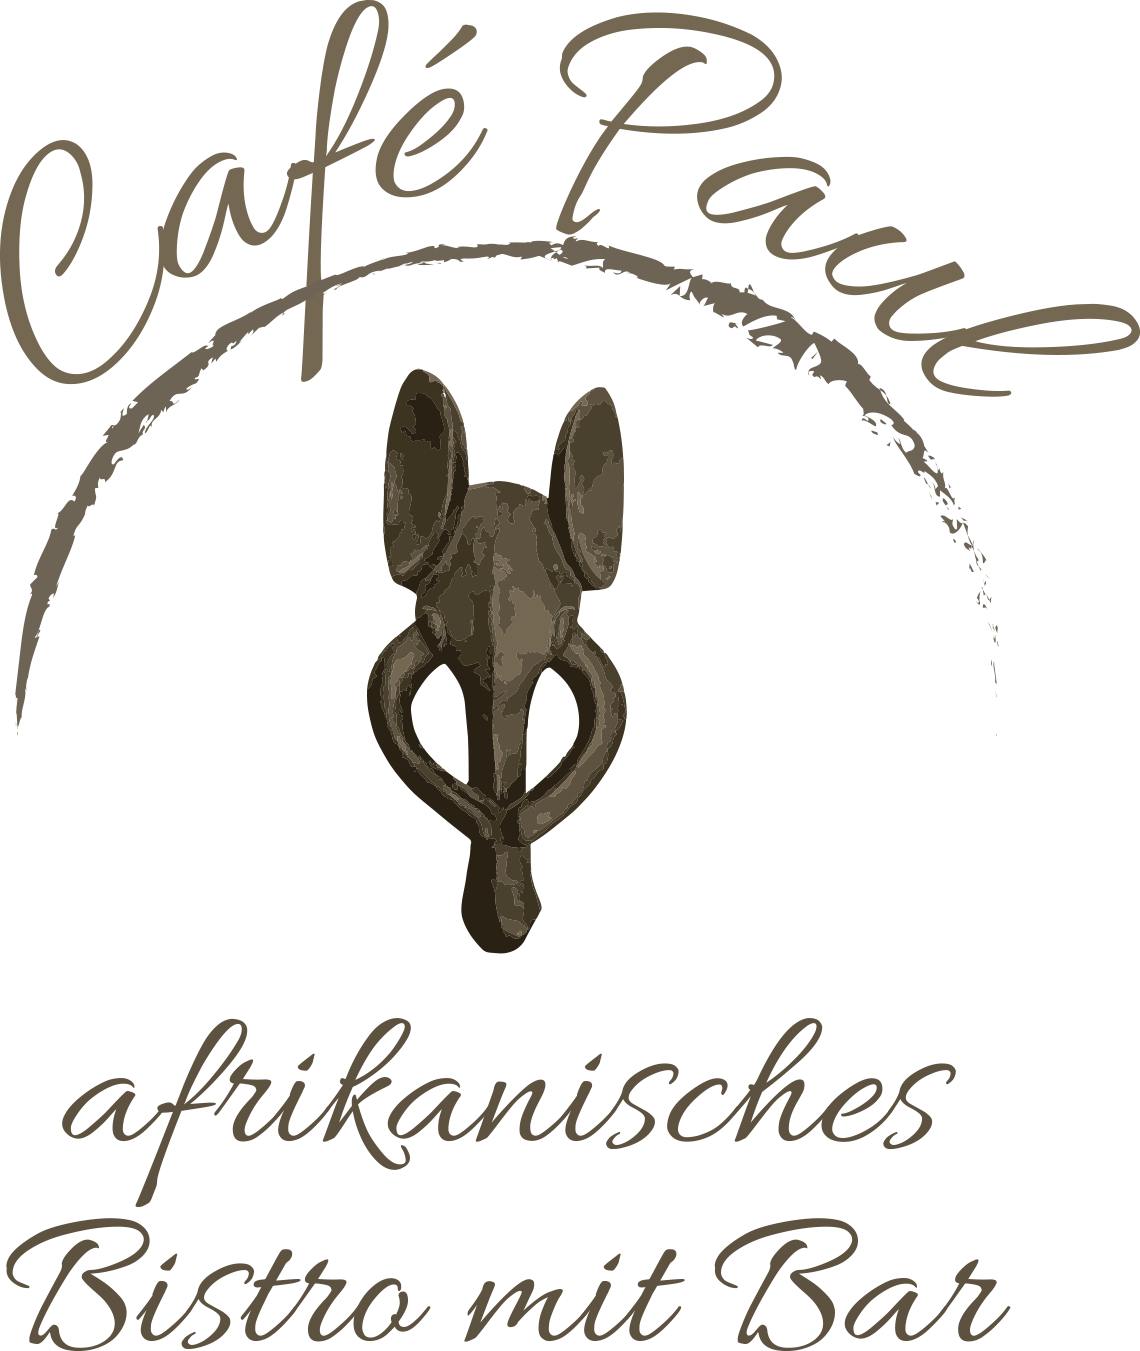 Café Paul